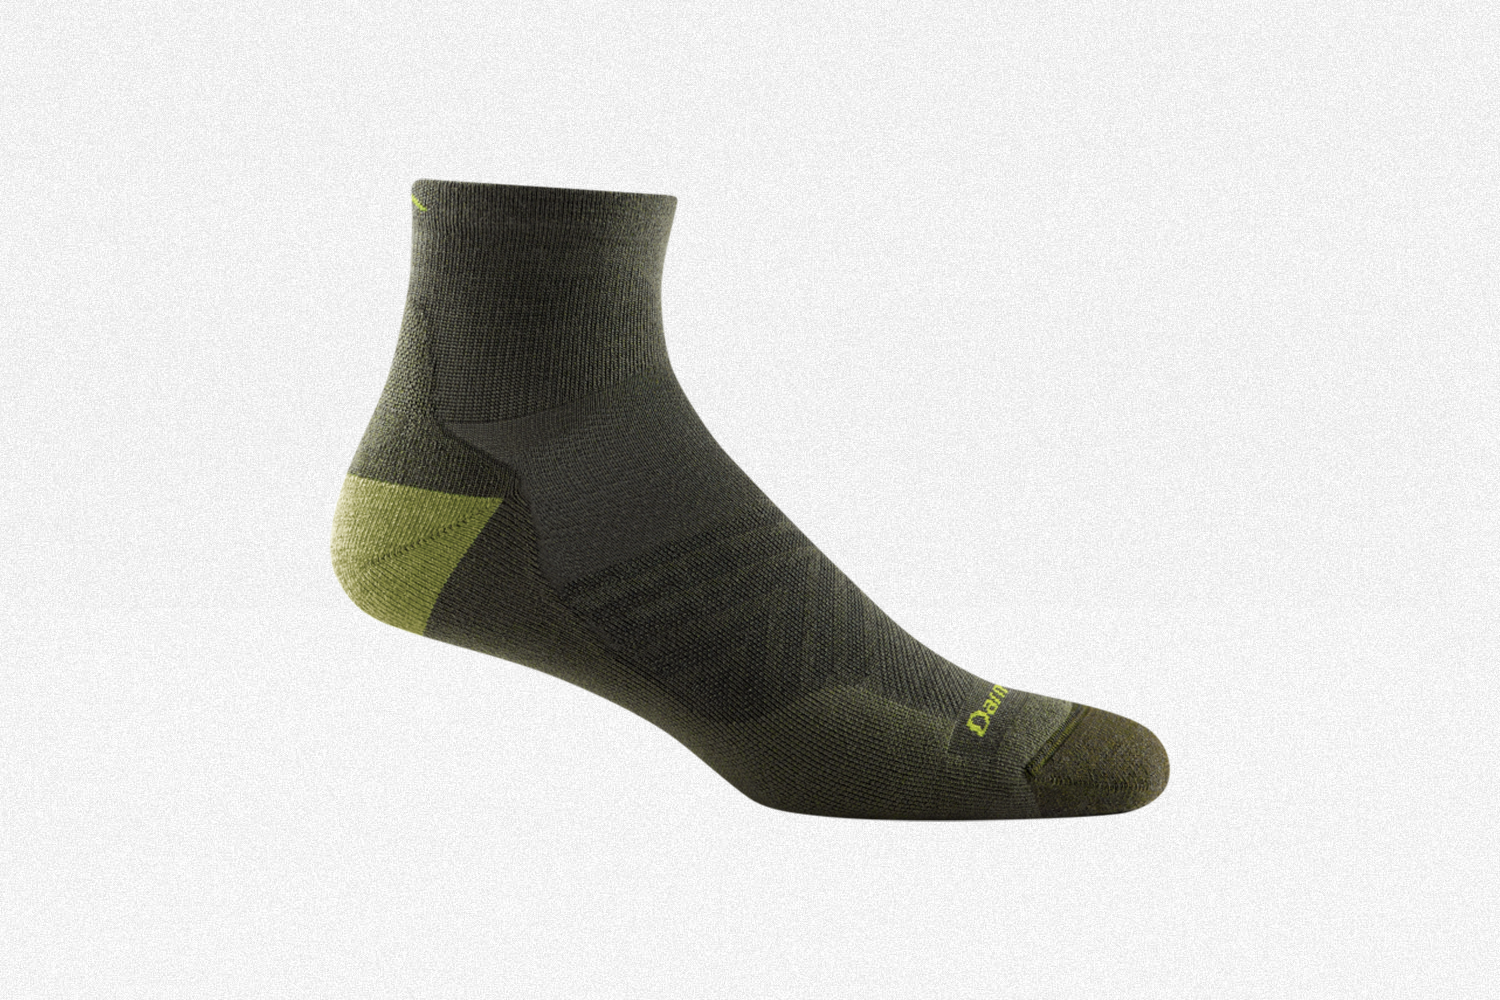 Darn Tough Ultra-Lightweight Running Socks in green